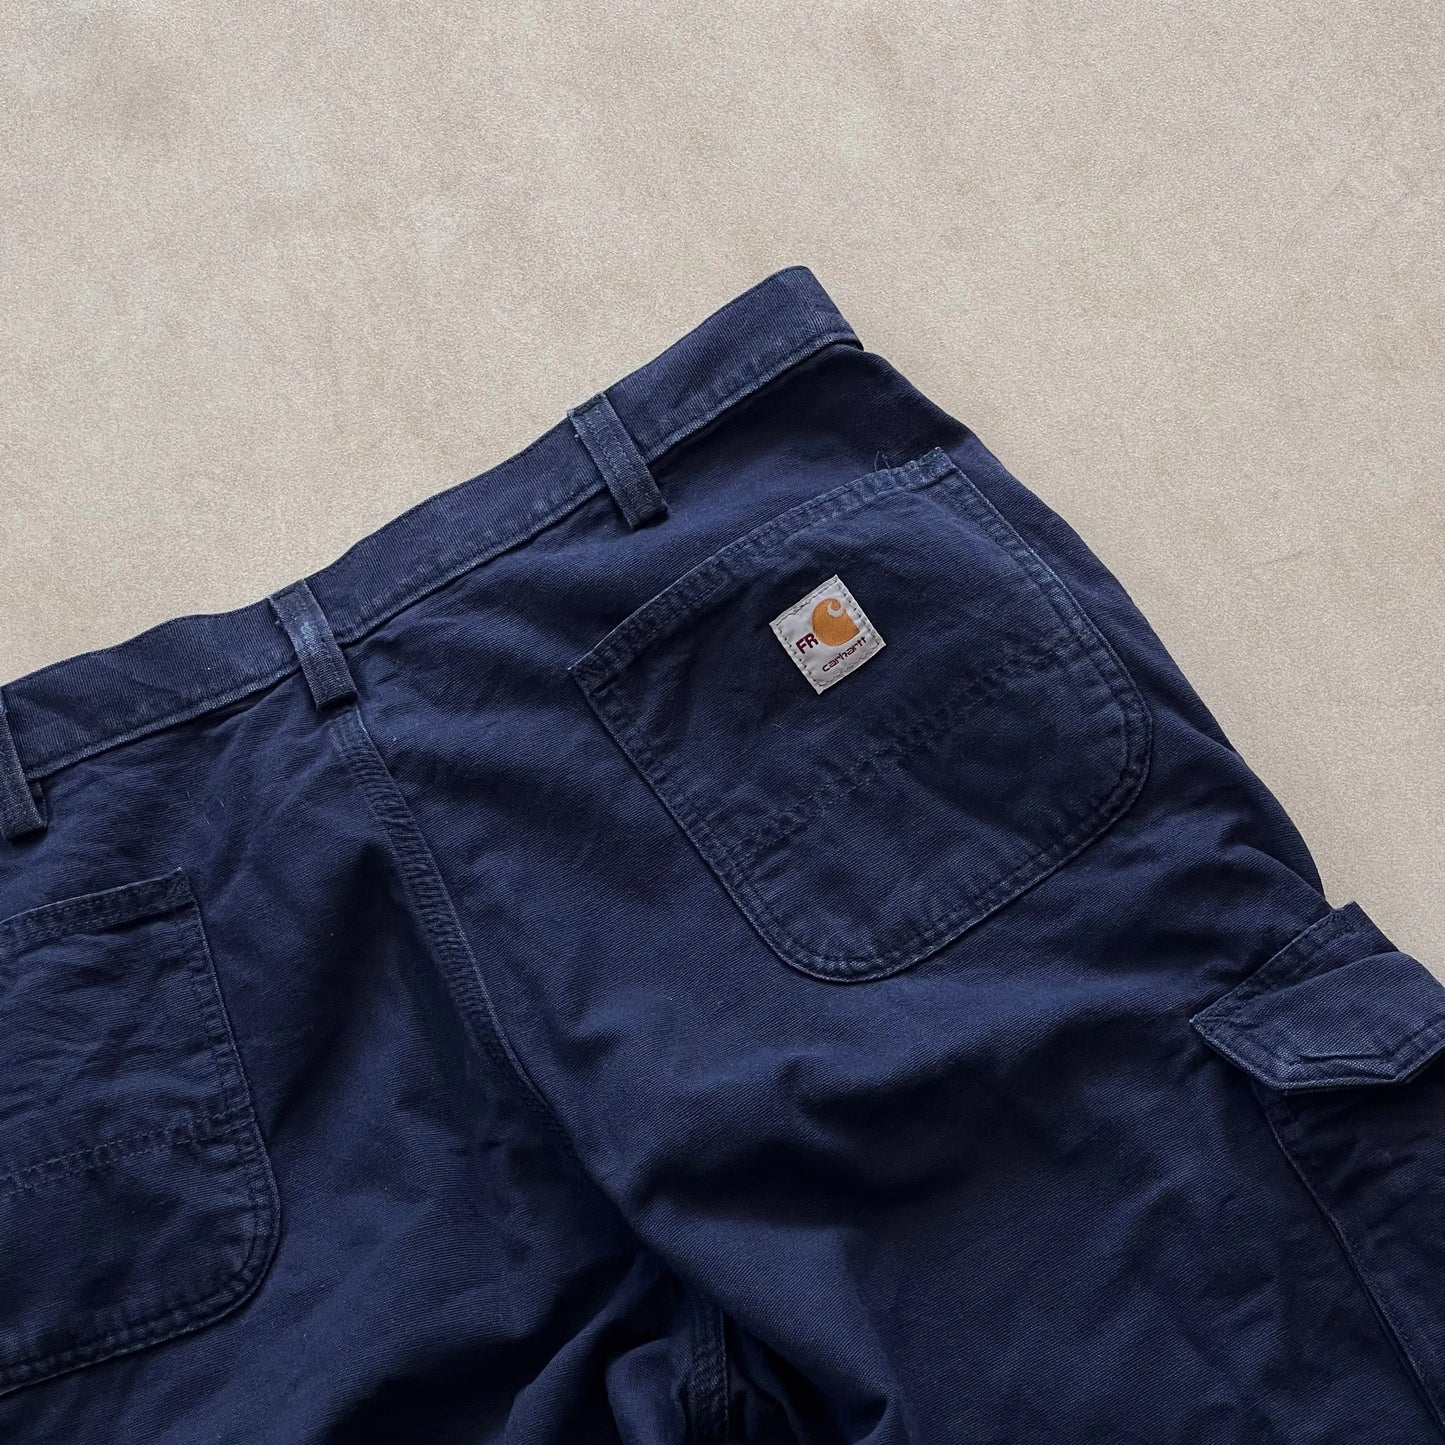 Carhartt-Flame-Resistant-Navy-Workwear-Jeans-38in-sullivansvintage